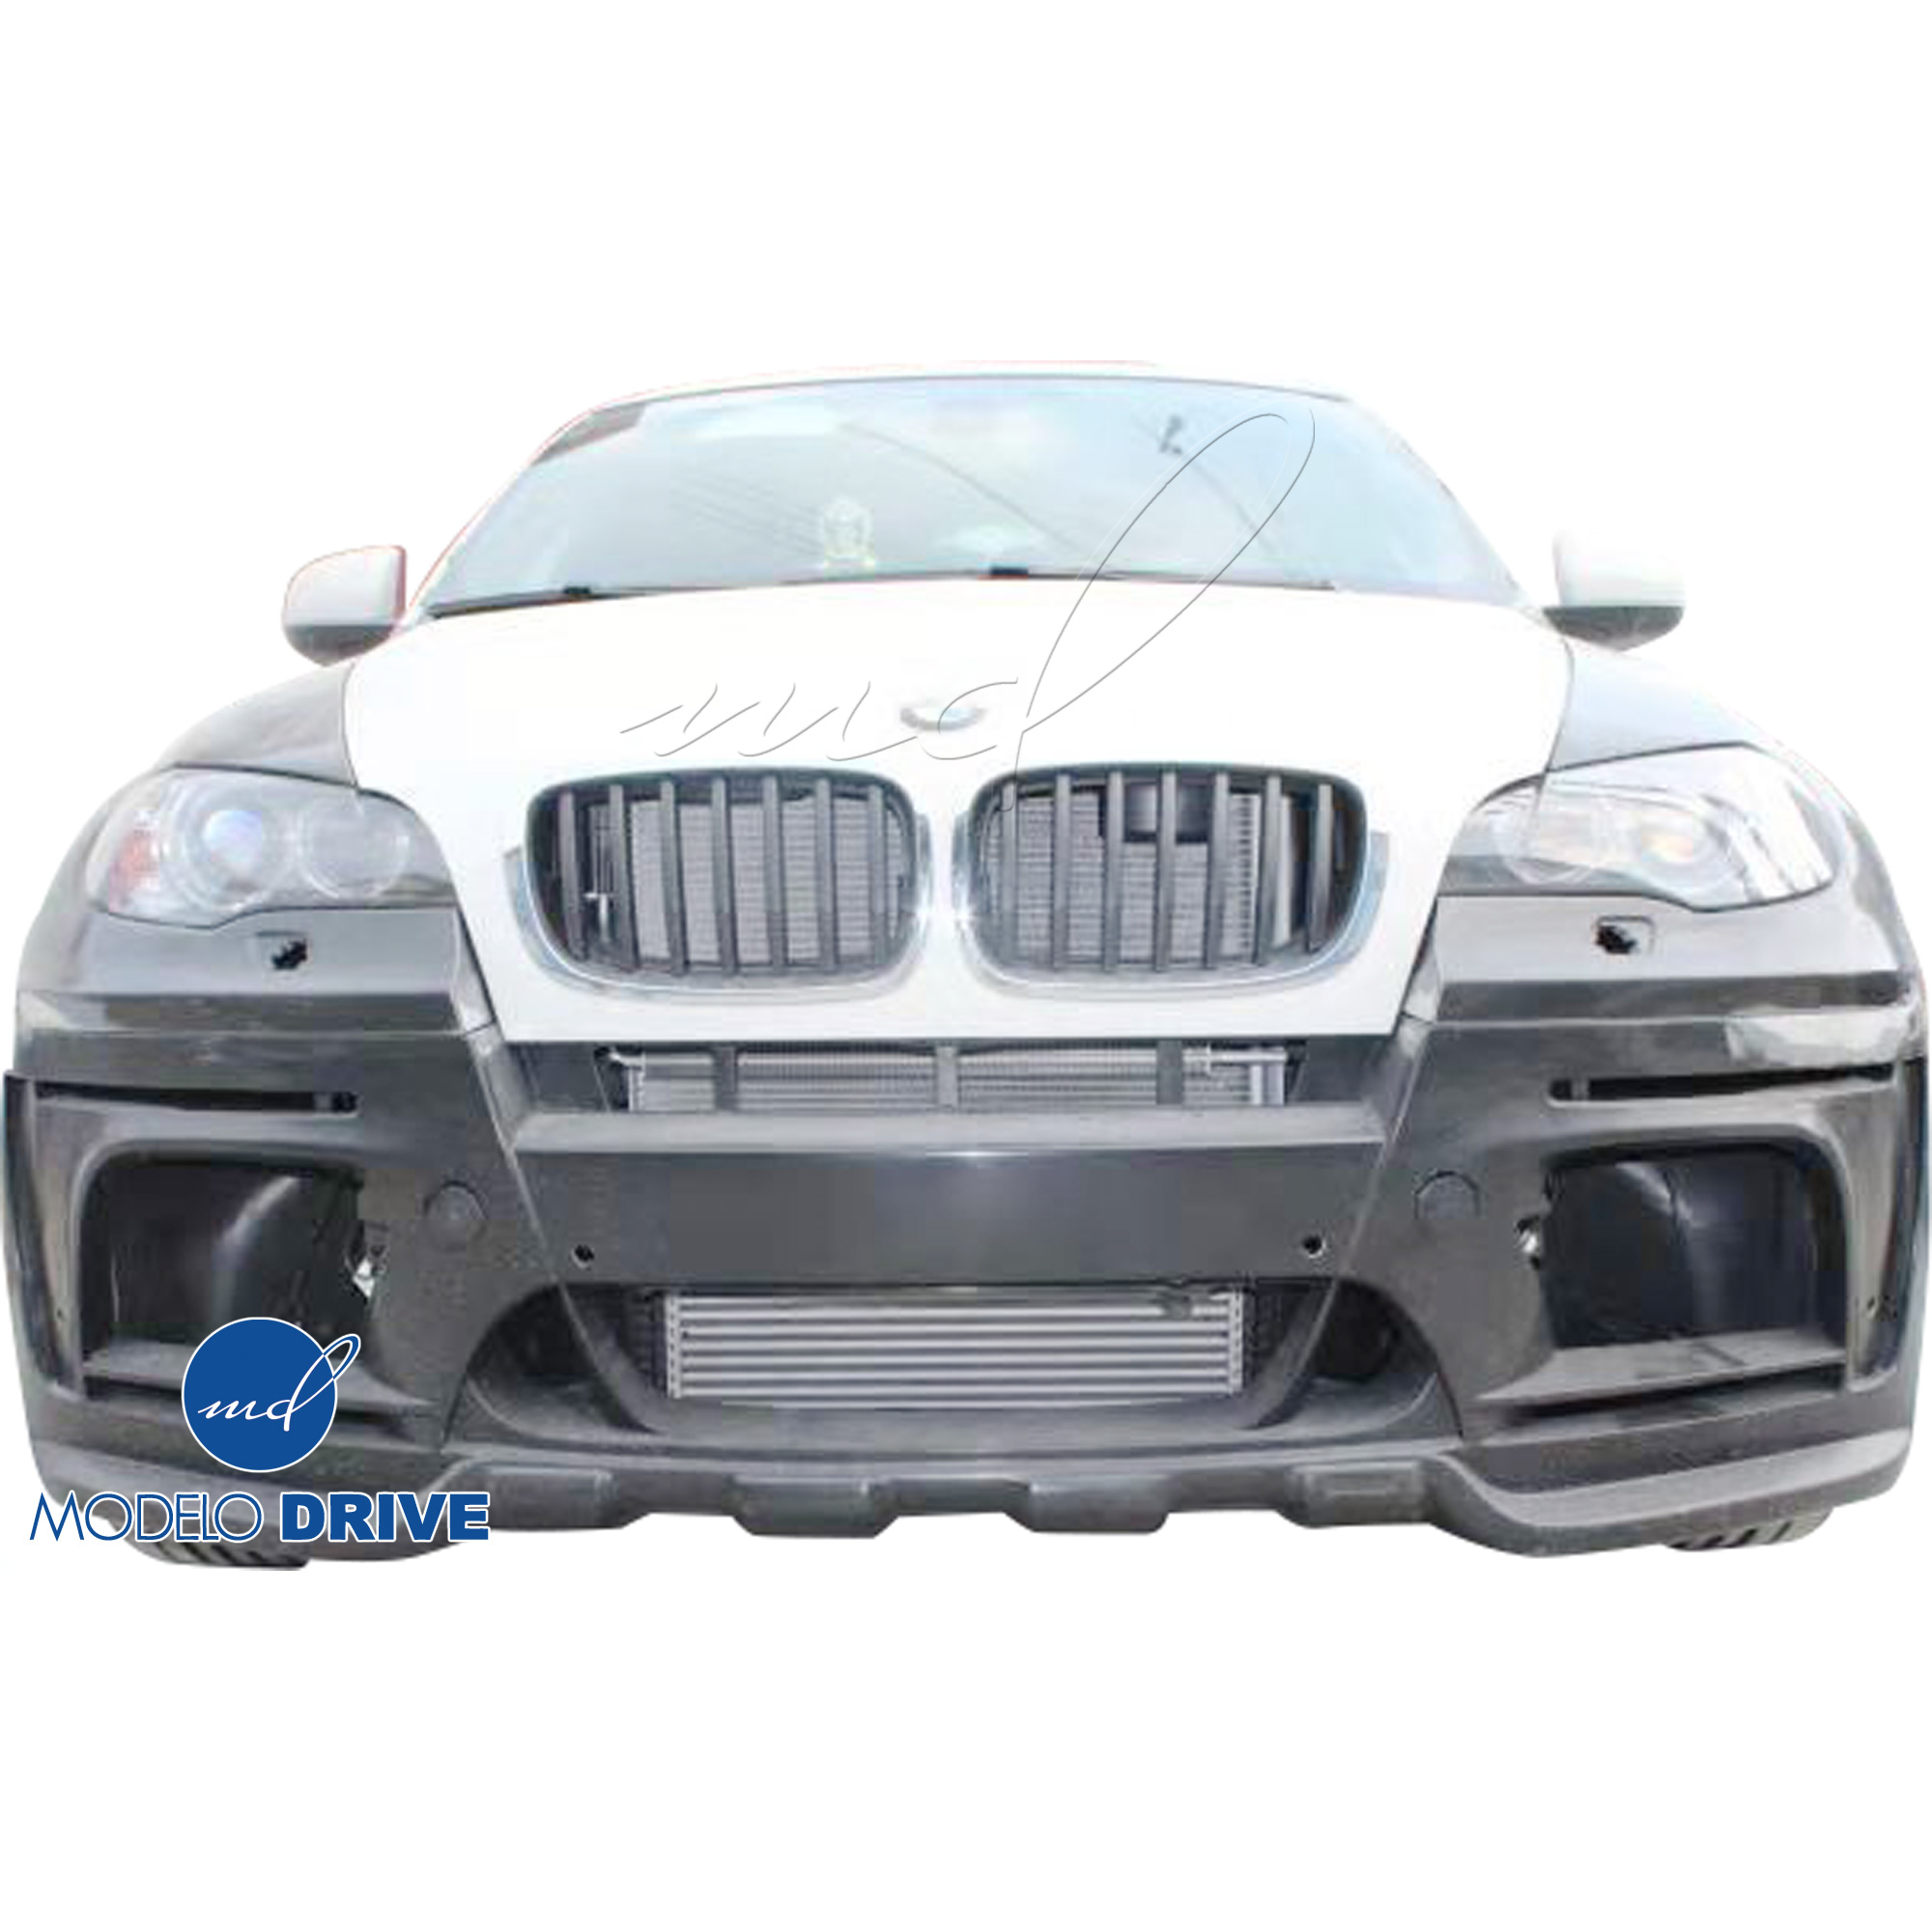 ModeloDrive FRP HAMA Wide Body Front Bumper > BMW X6 E71 2008-2014 - Image 19